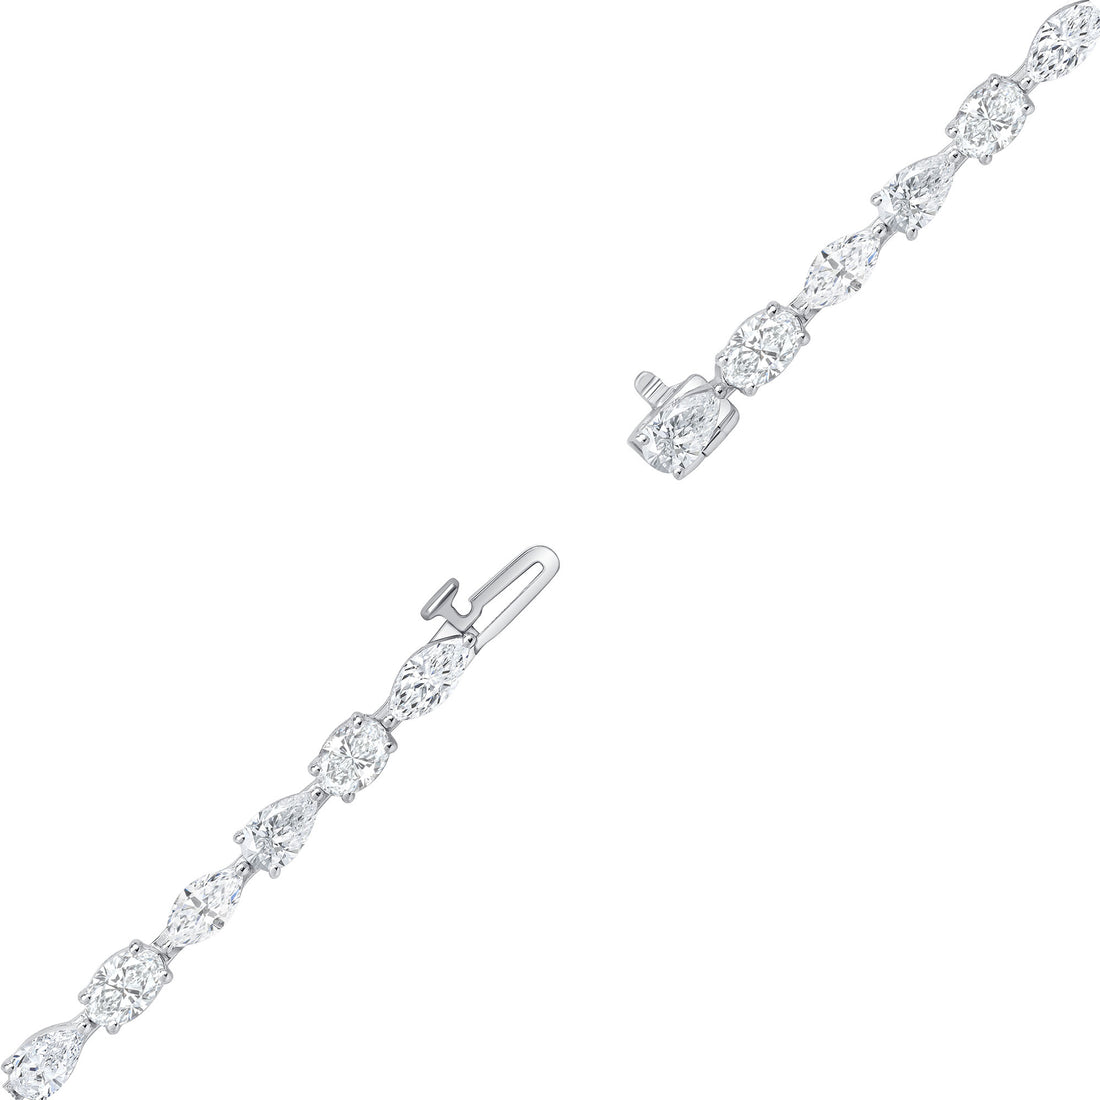 15.73 CT Mixed-cut Diamond Tennis Necklace